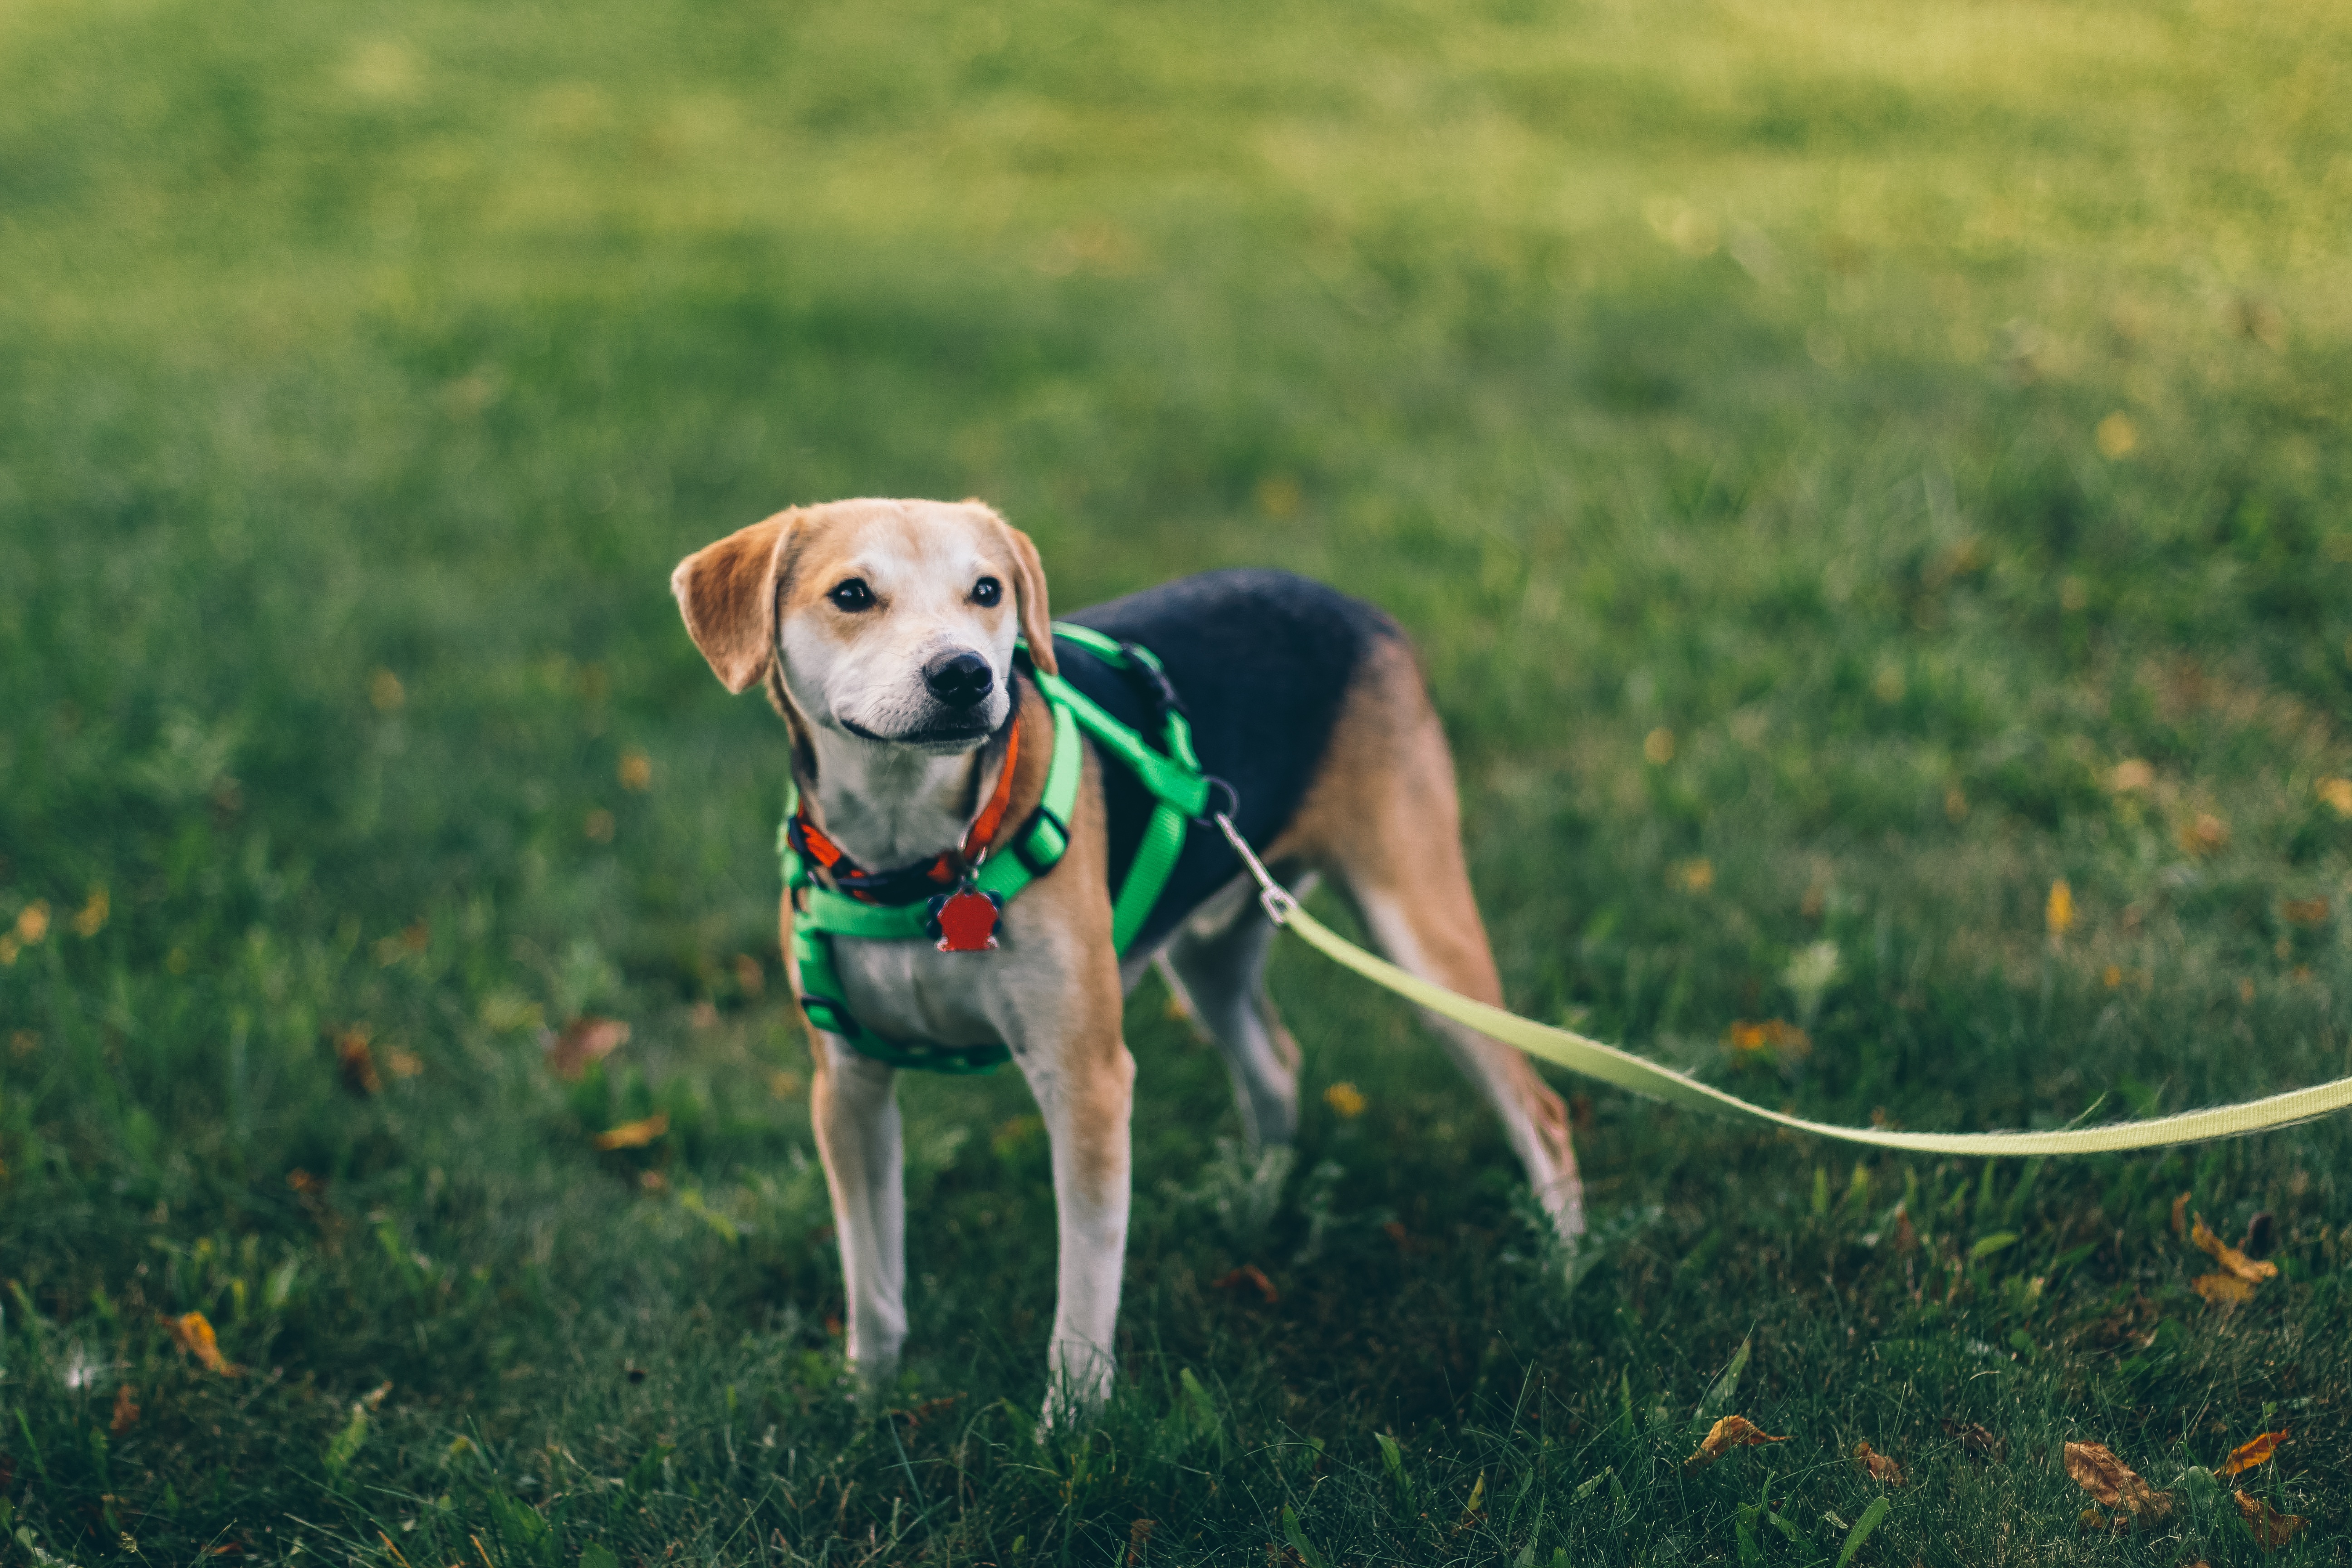 A lop-eared puppy on a leash walking on a green lawn